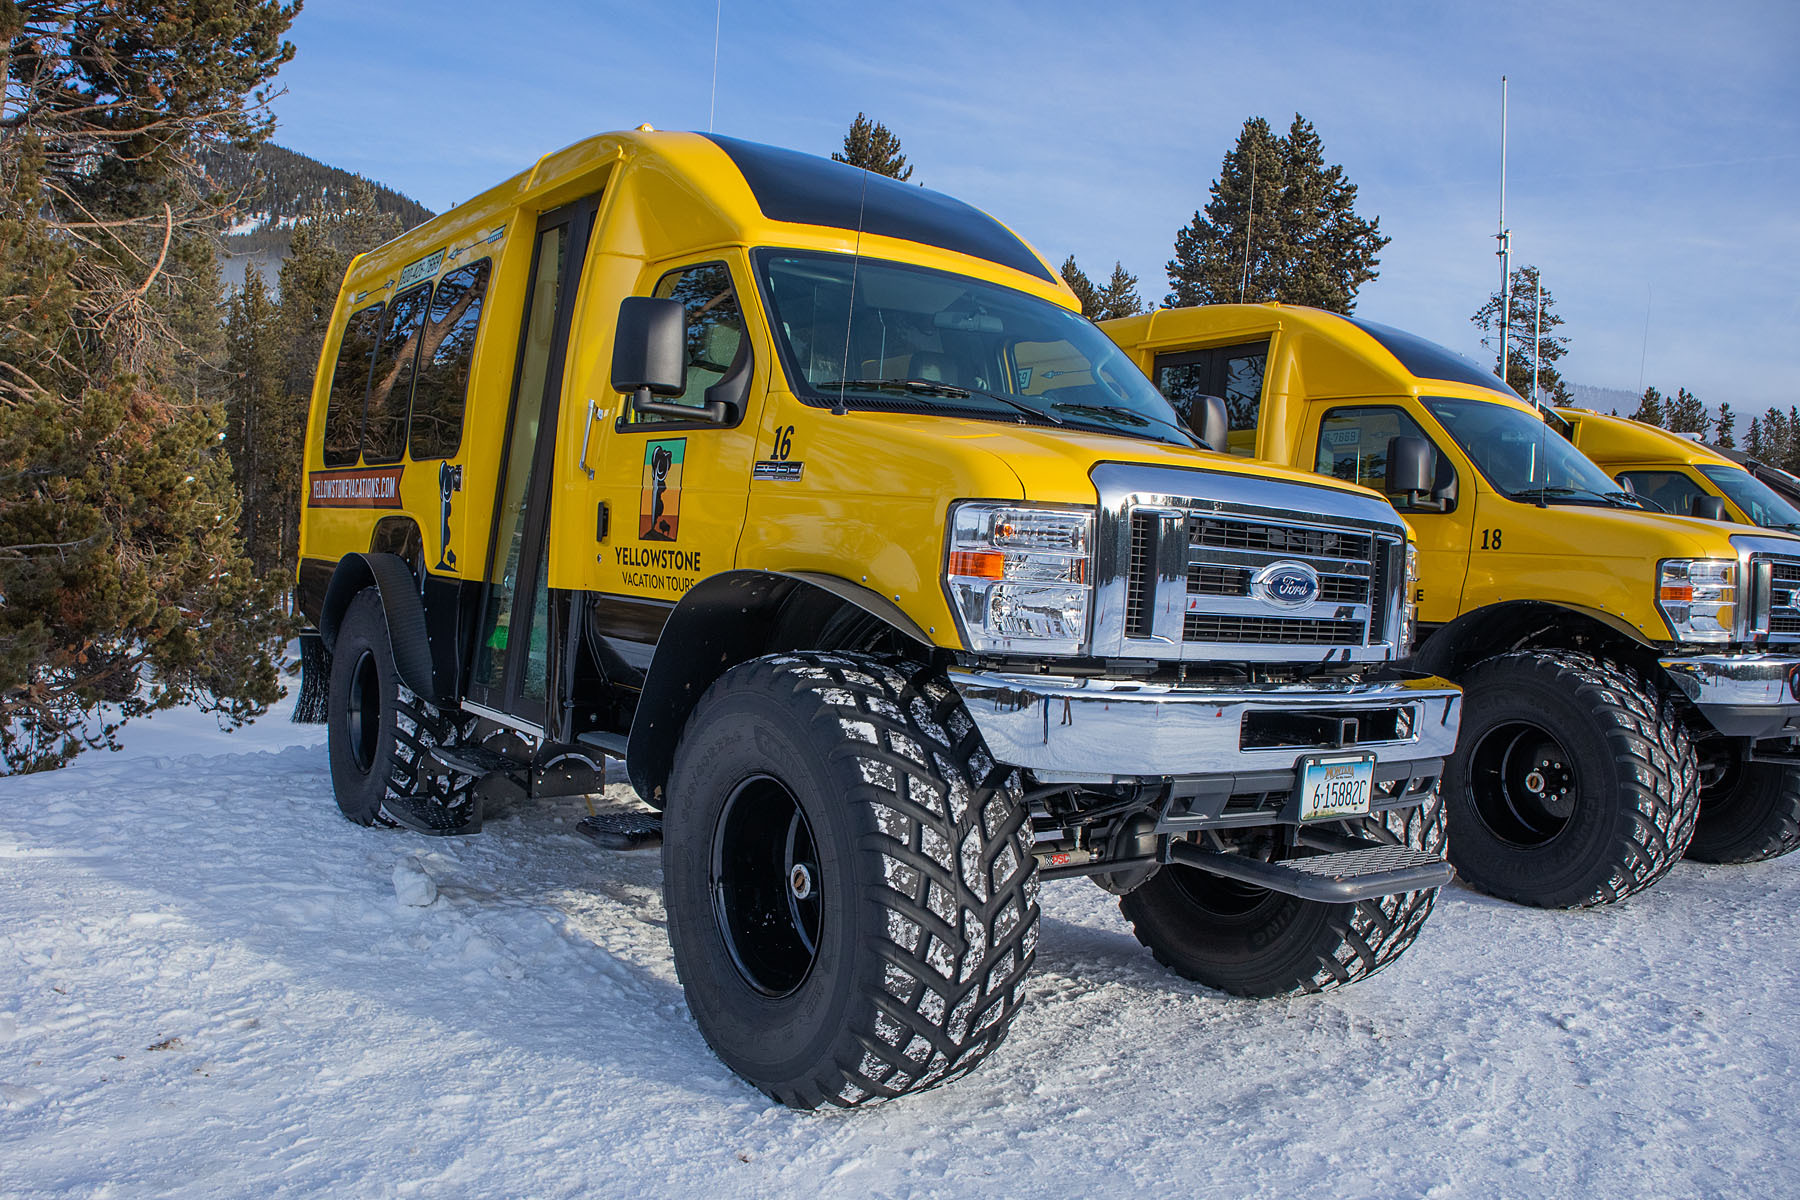 Yellowstone snow coach, January 2021.  Click for next photo.